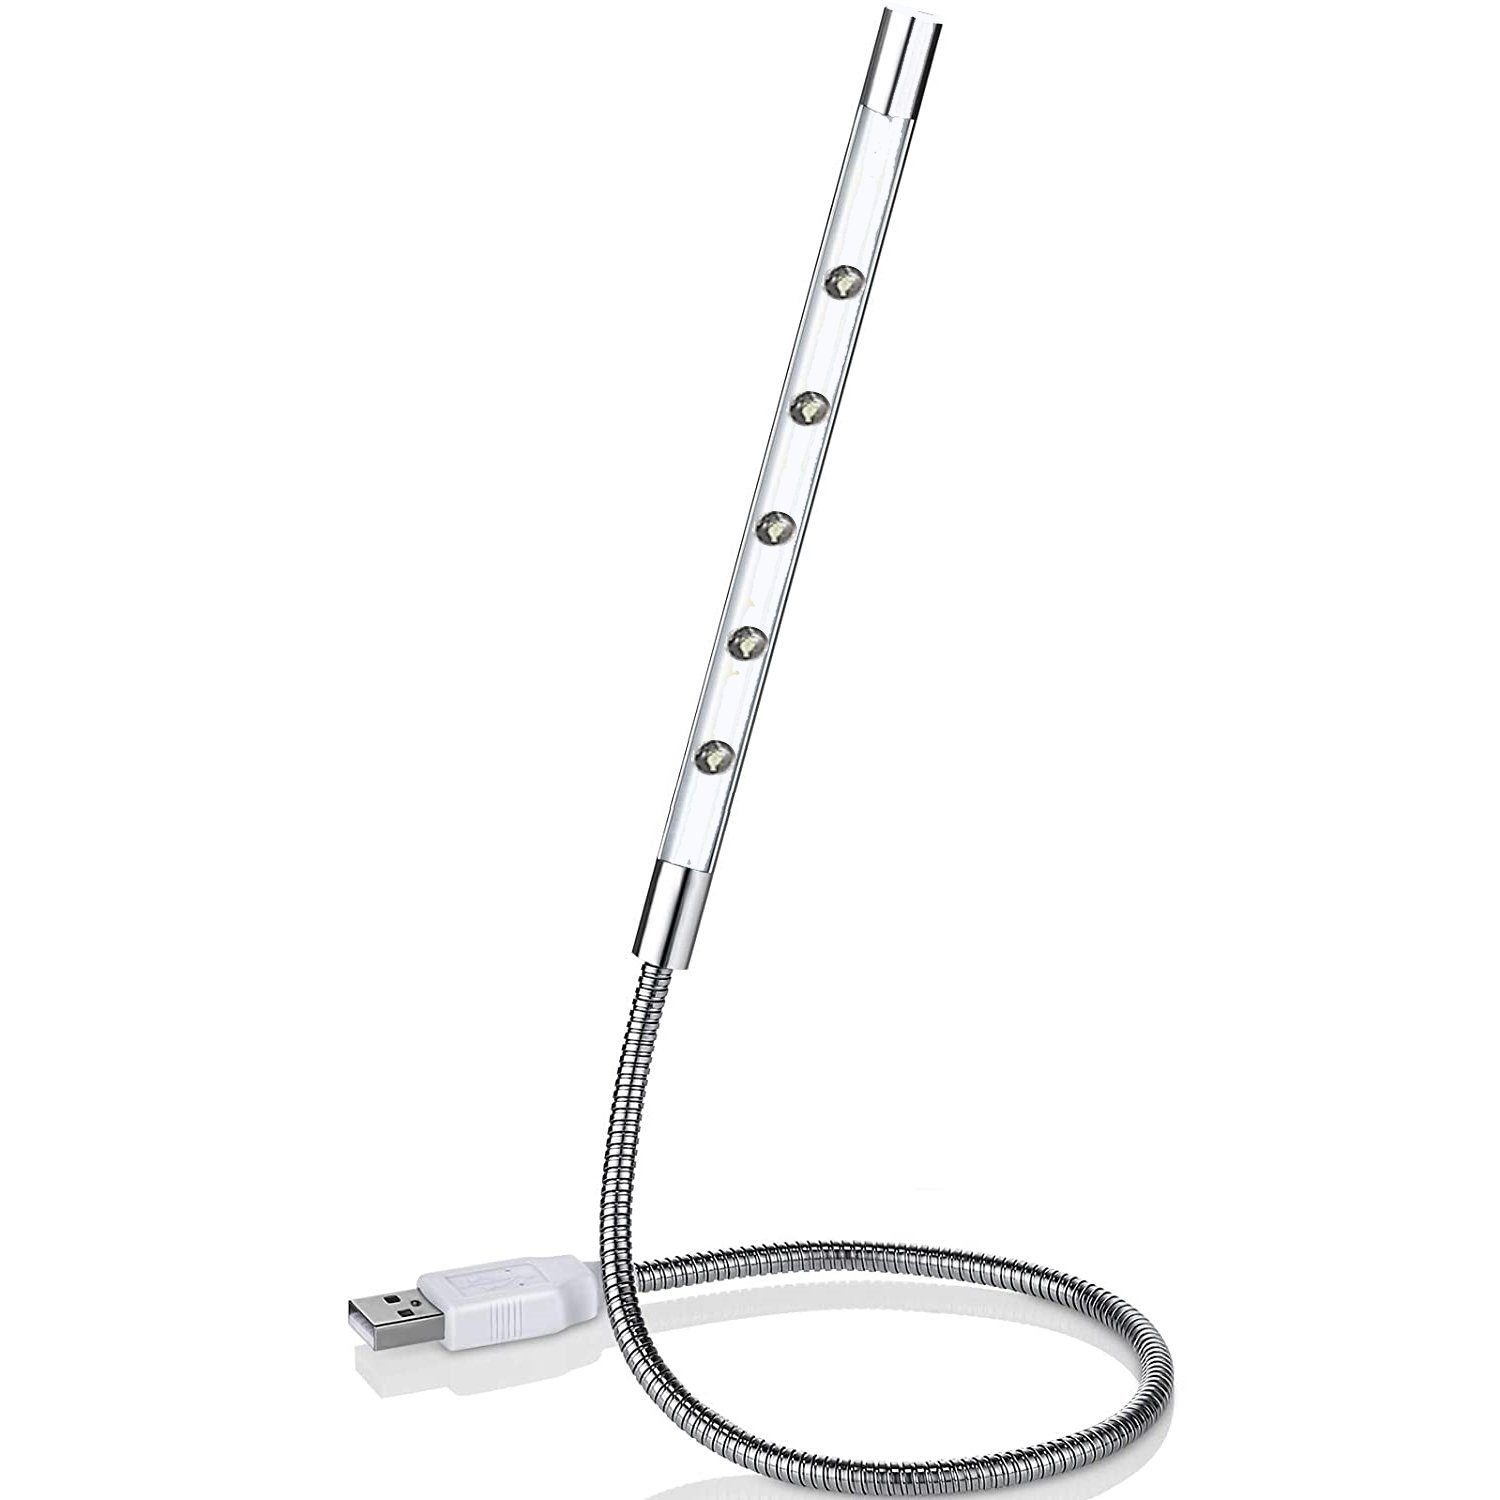 MAVURA LED Leselampe Schwanenhals USB LED Lampe schwenkbar mit 5 ultrahellen LED, LED fest integriert, Tageslichtweiß, Schwanenhalslampe Notebooklampe Laptop Notebook Leuchte | Tageslichtlampen